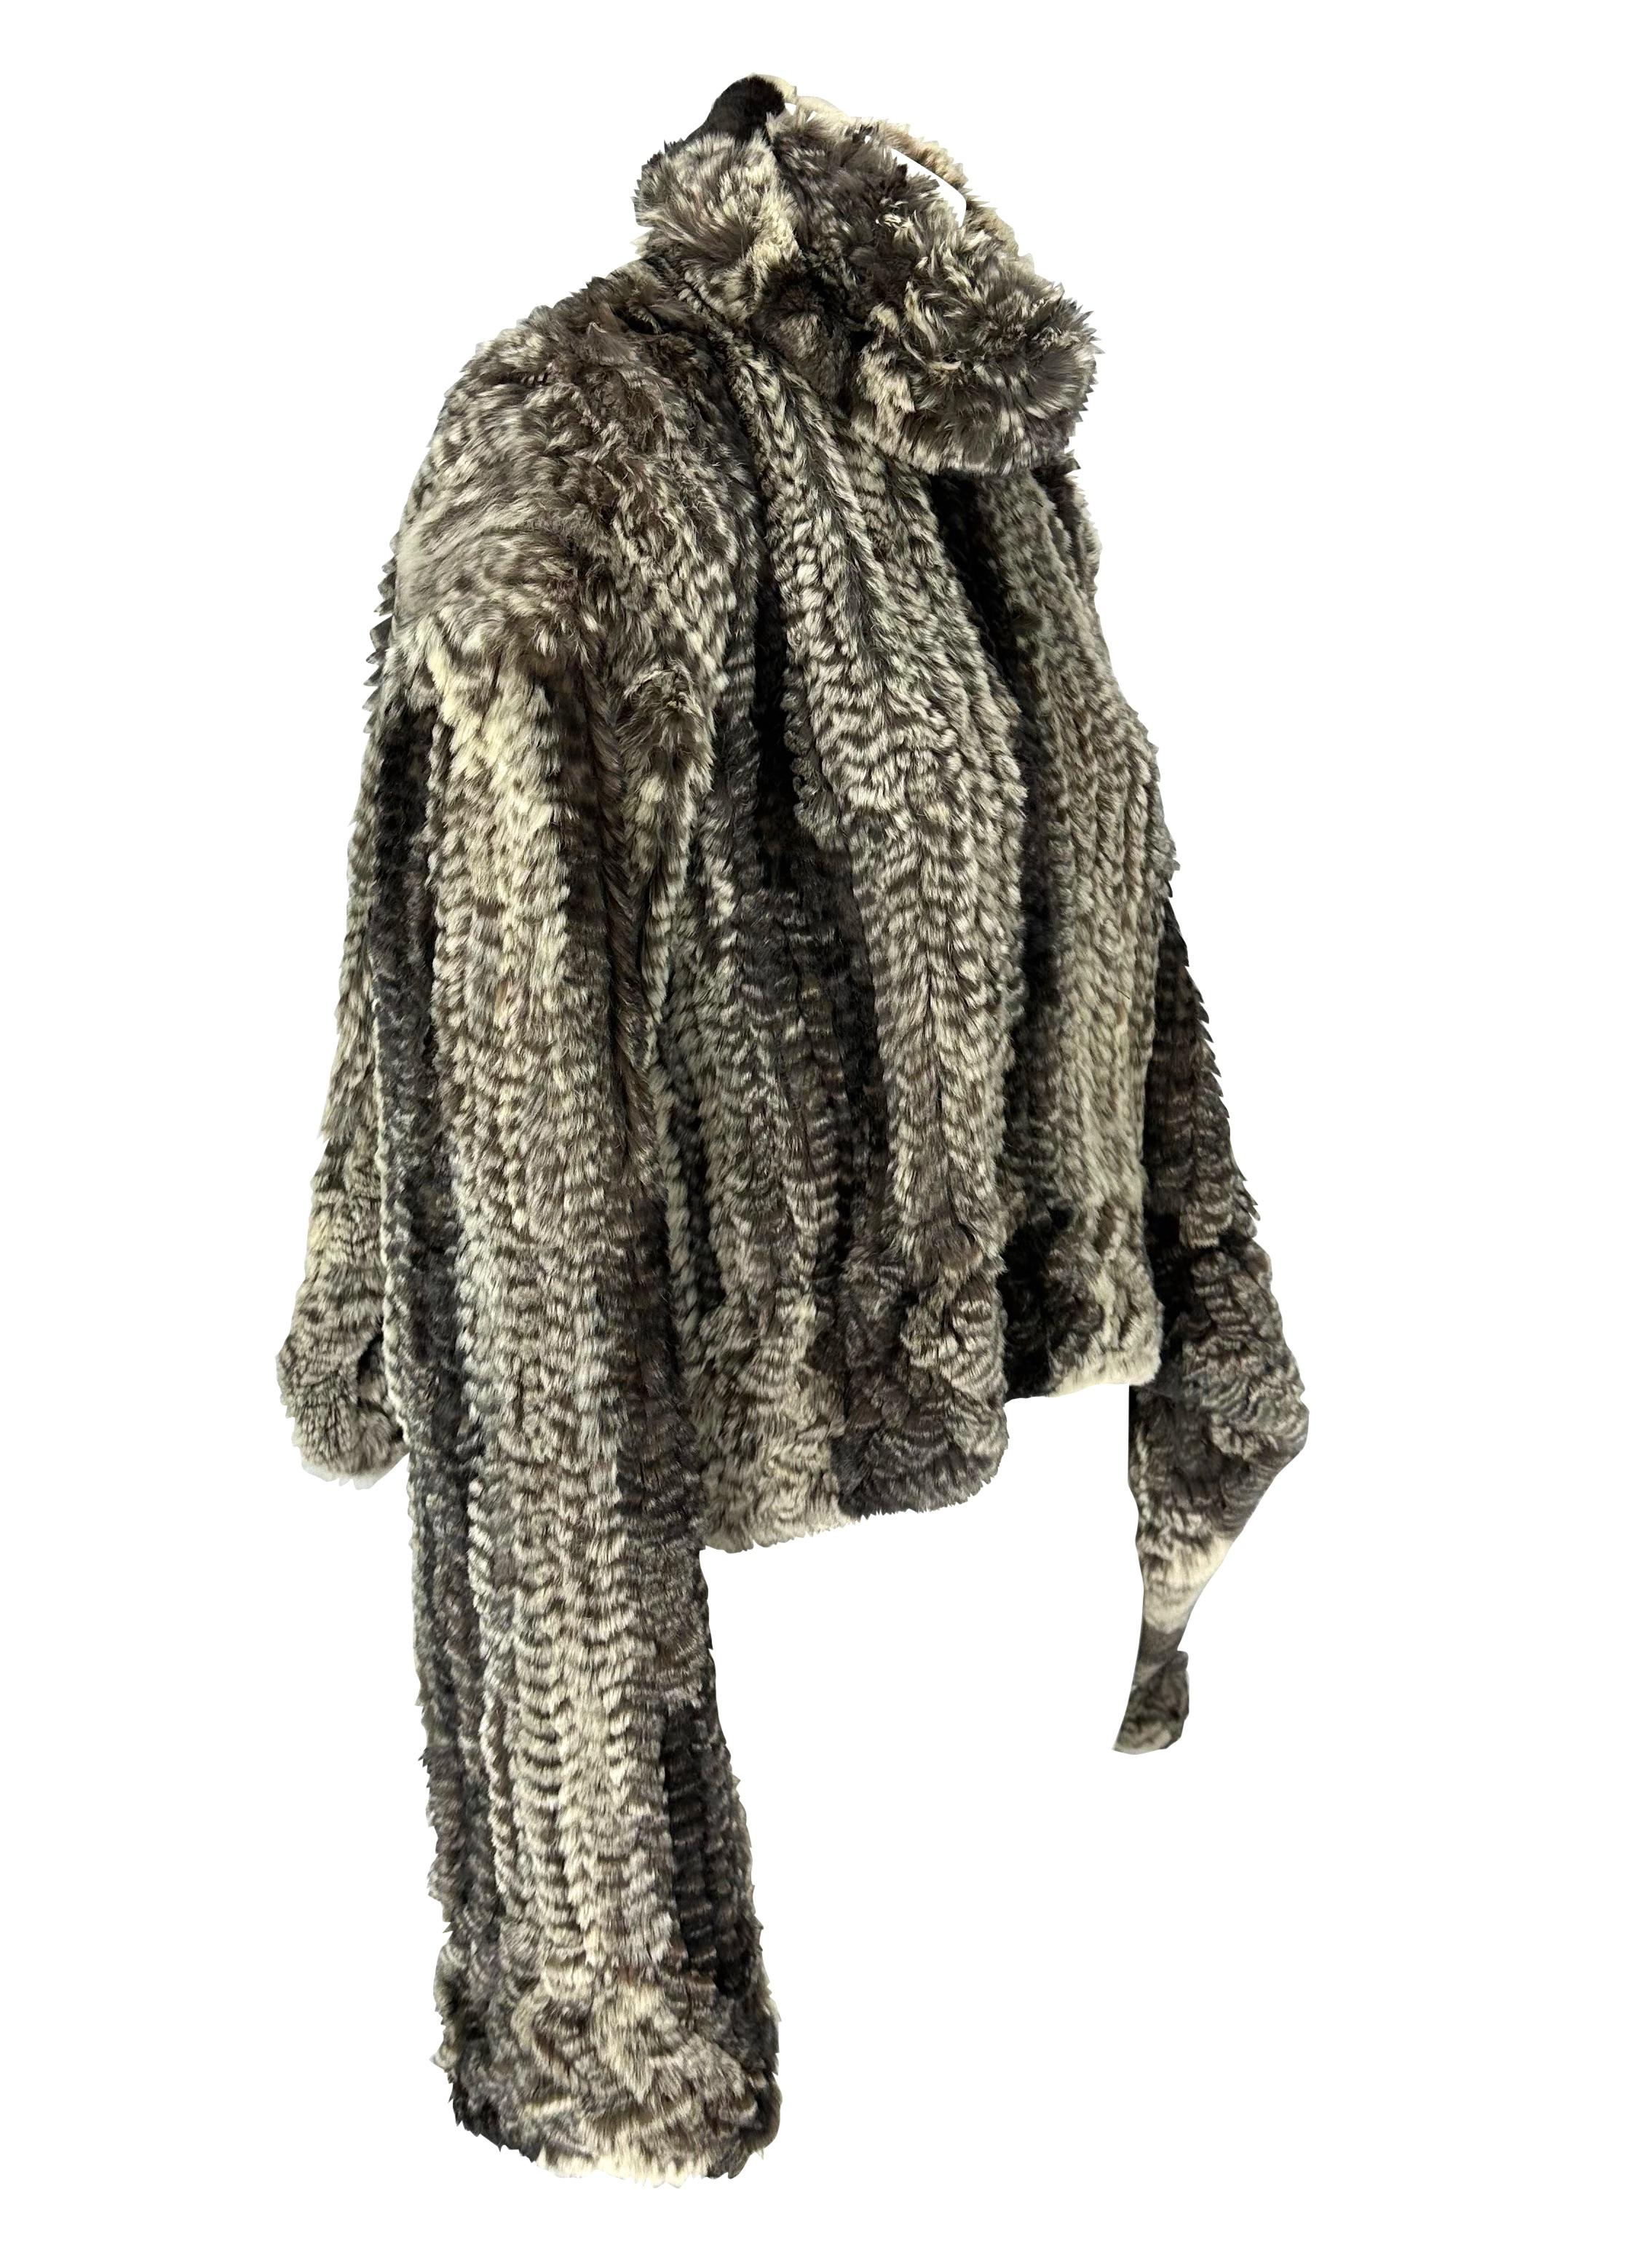 F/W 2000 John Galliano Grey Knit Fur Oversized Asymmetric Tunic Sweater Top For Sale 5